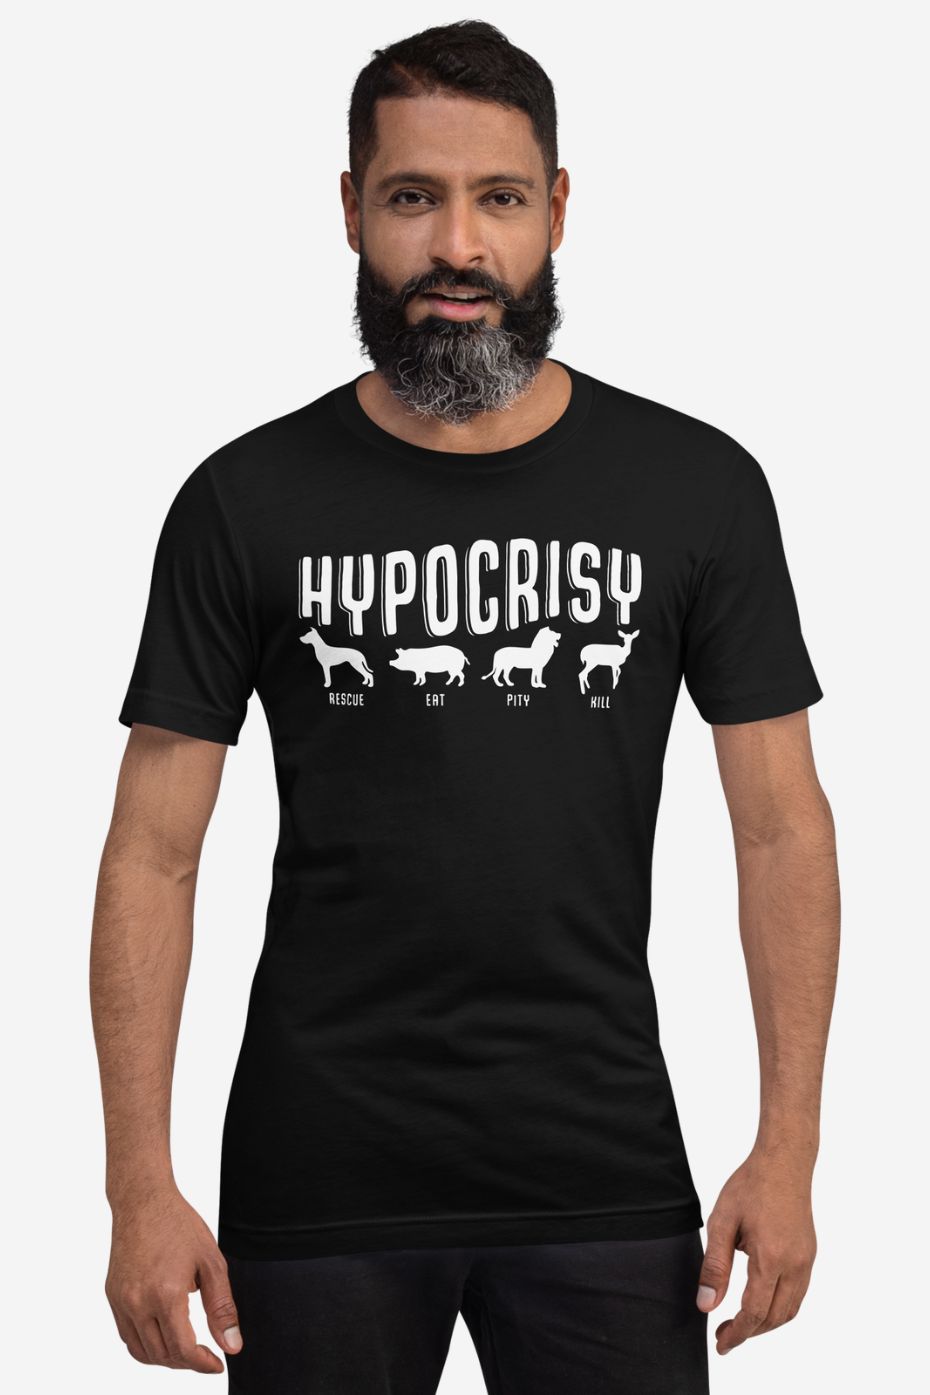 Hypocrisy - Unisex vegan t-shirt